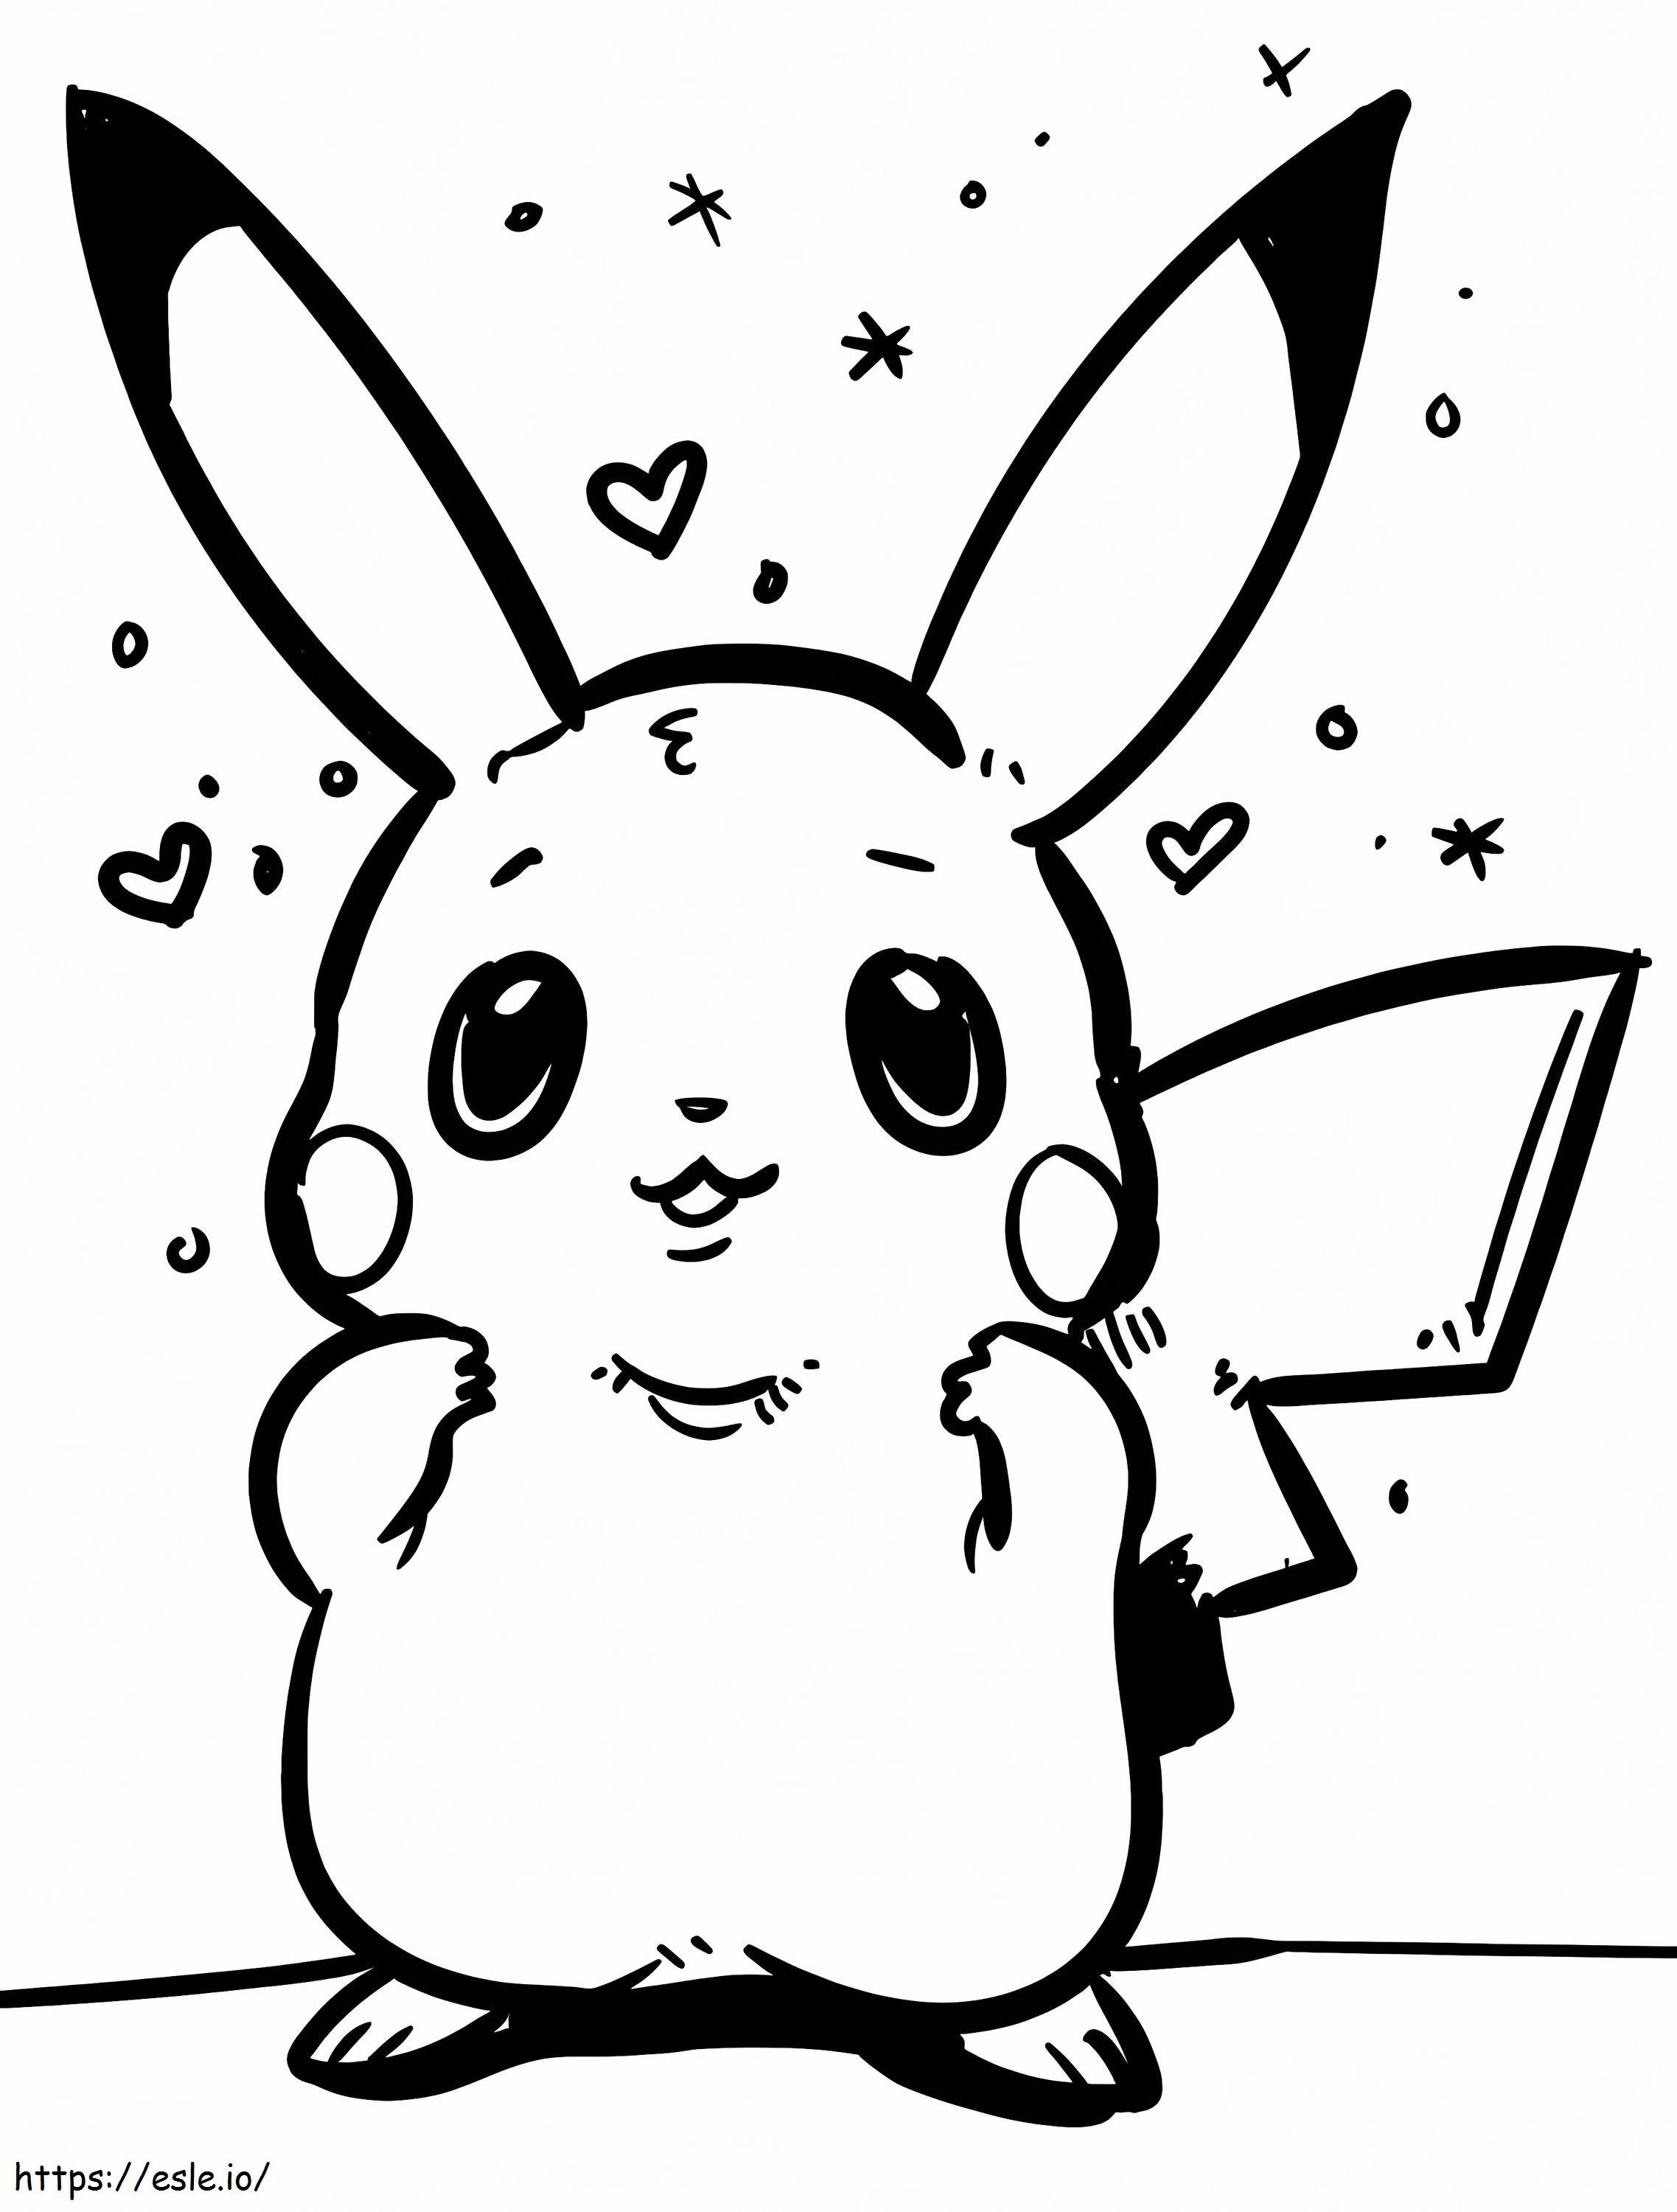 Super cute pikachu coloring page